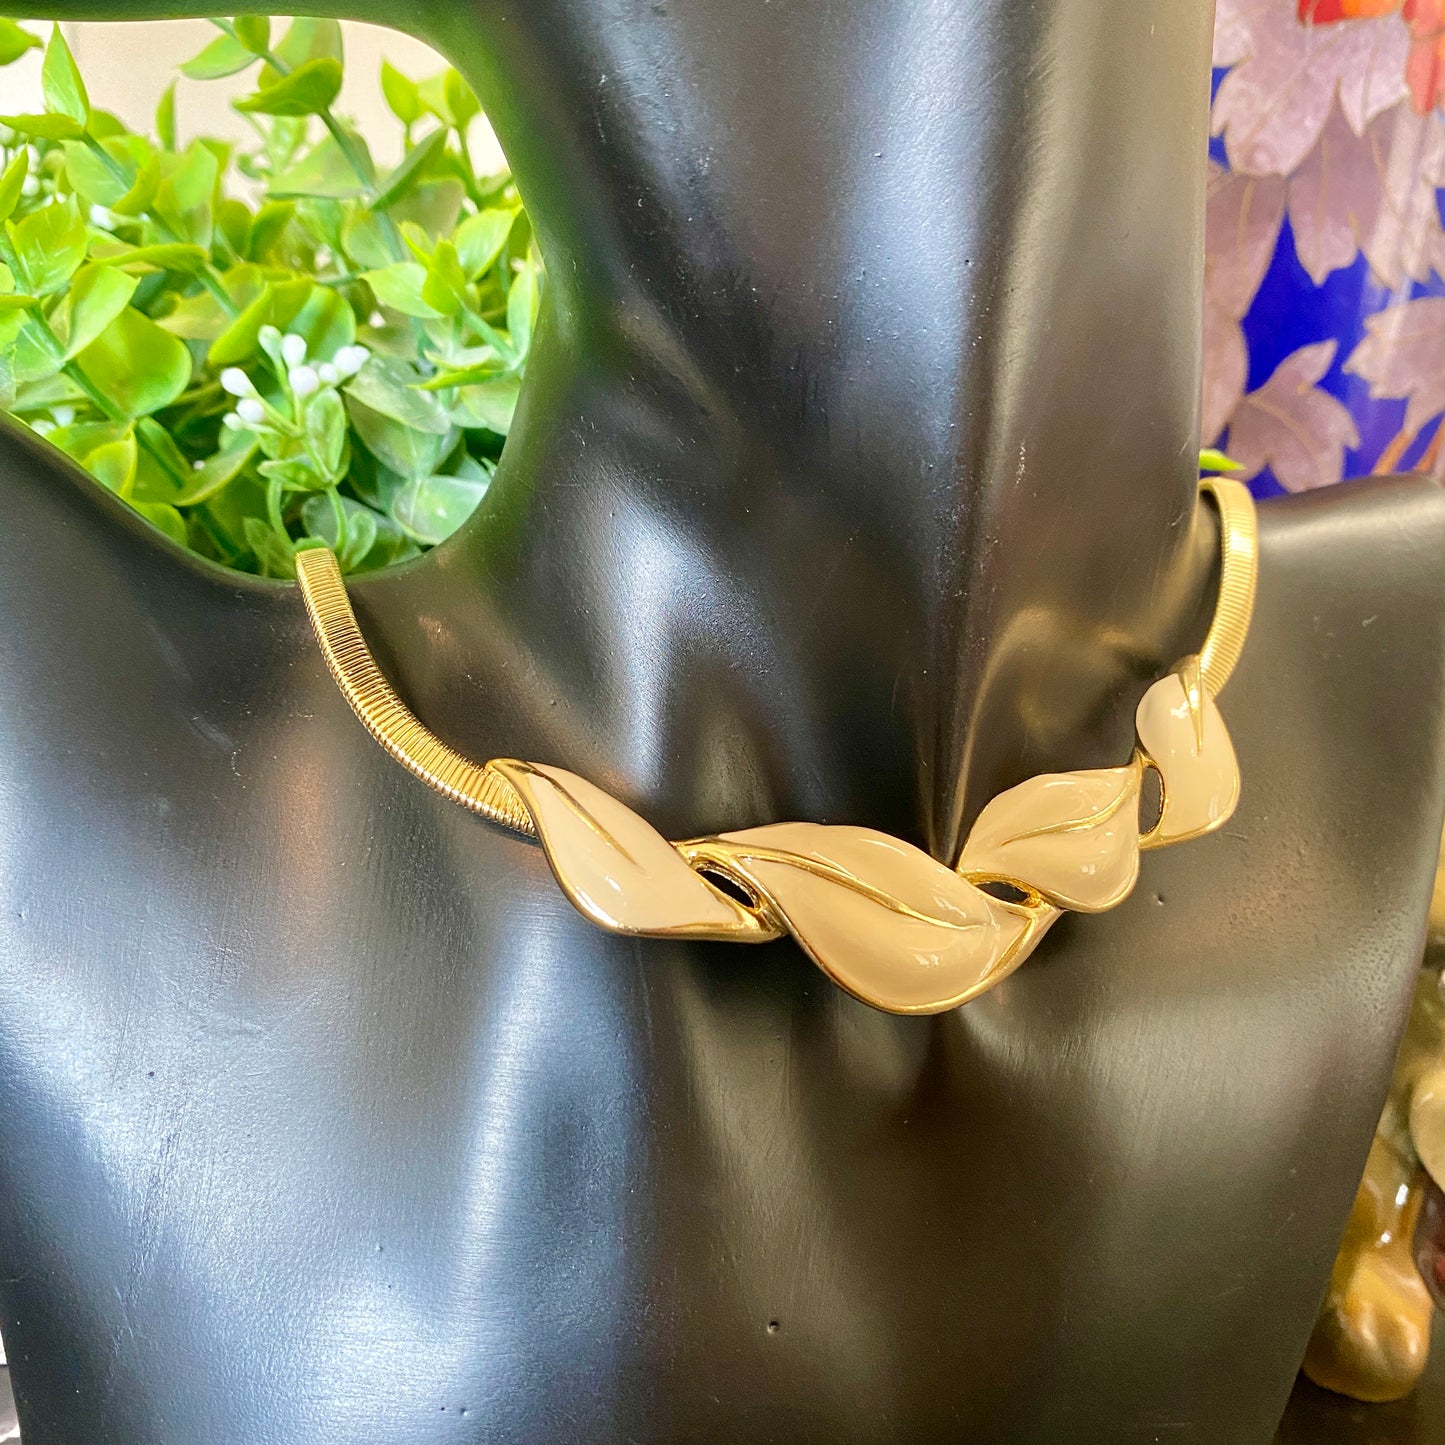 Leaf Motif Snake Chain Collar Necklace